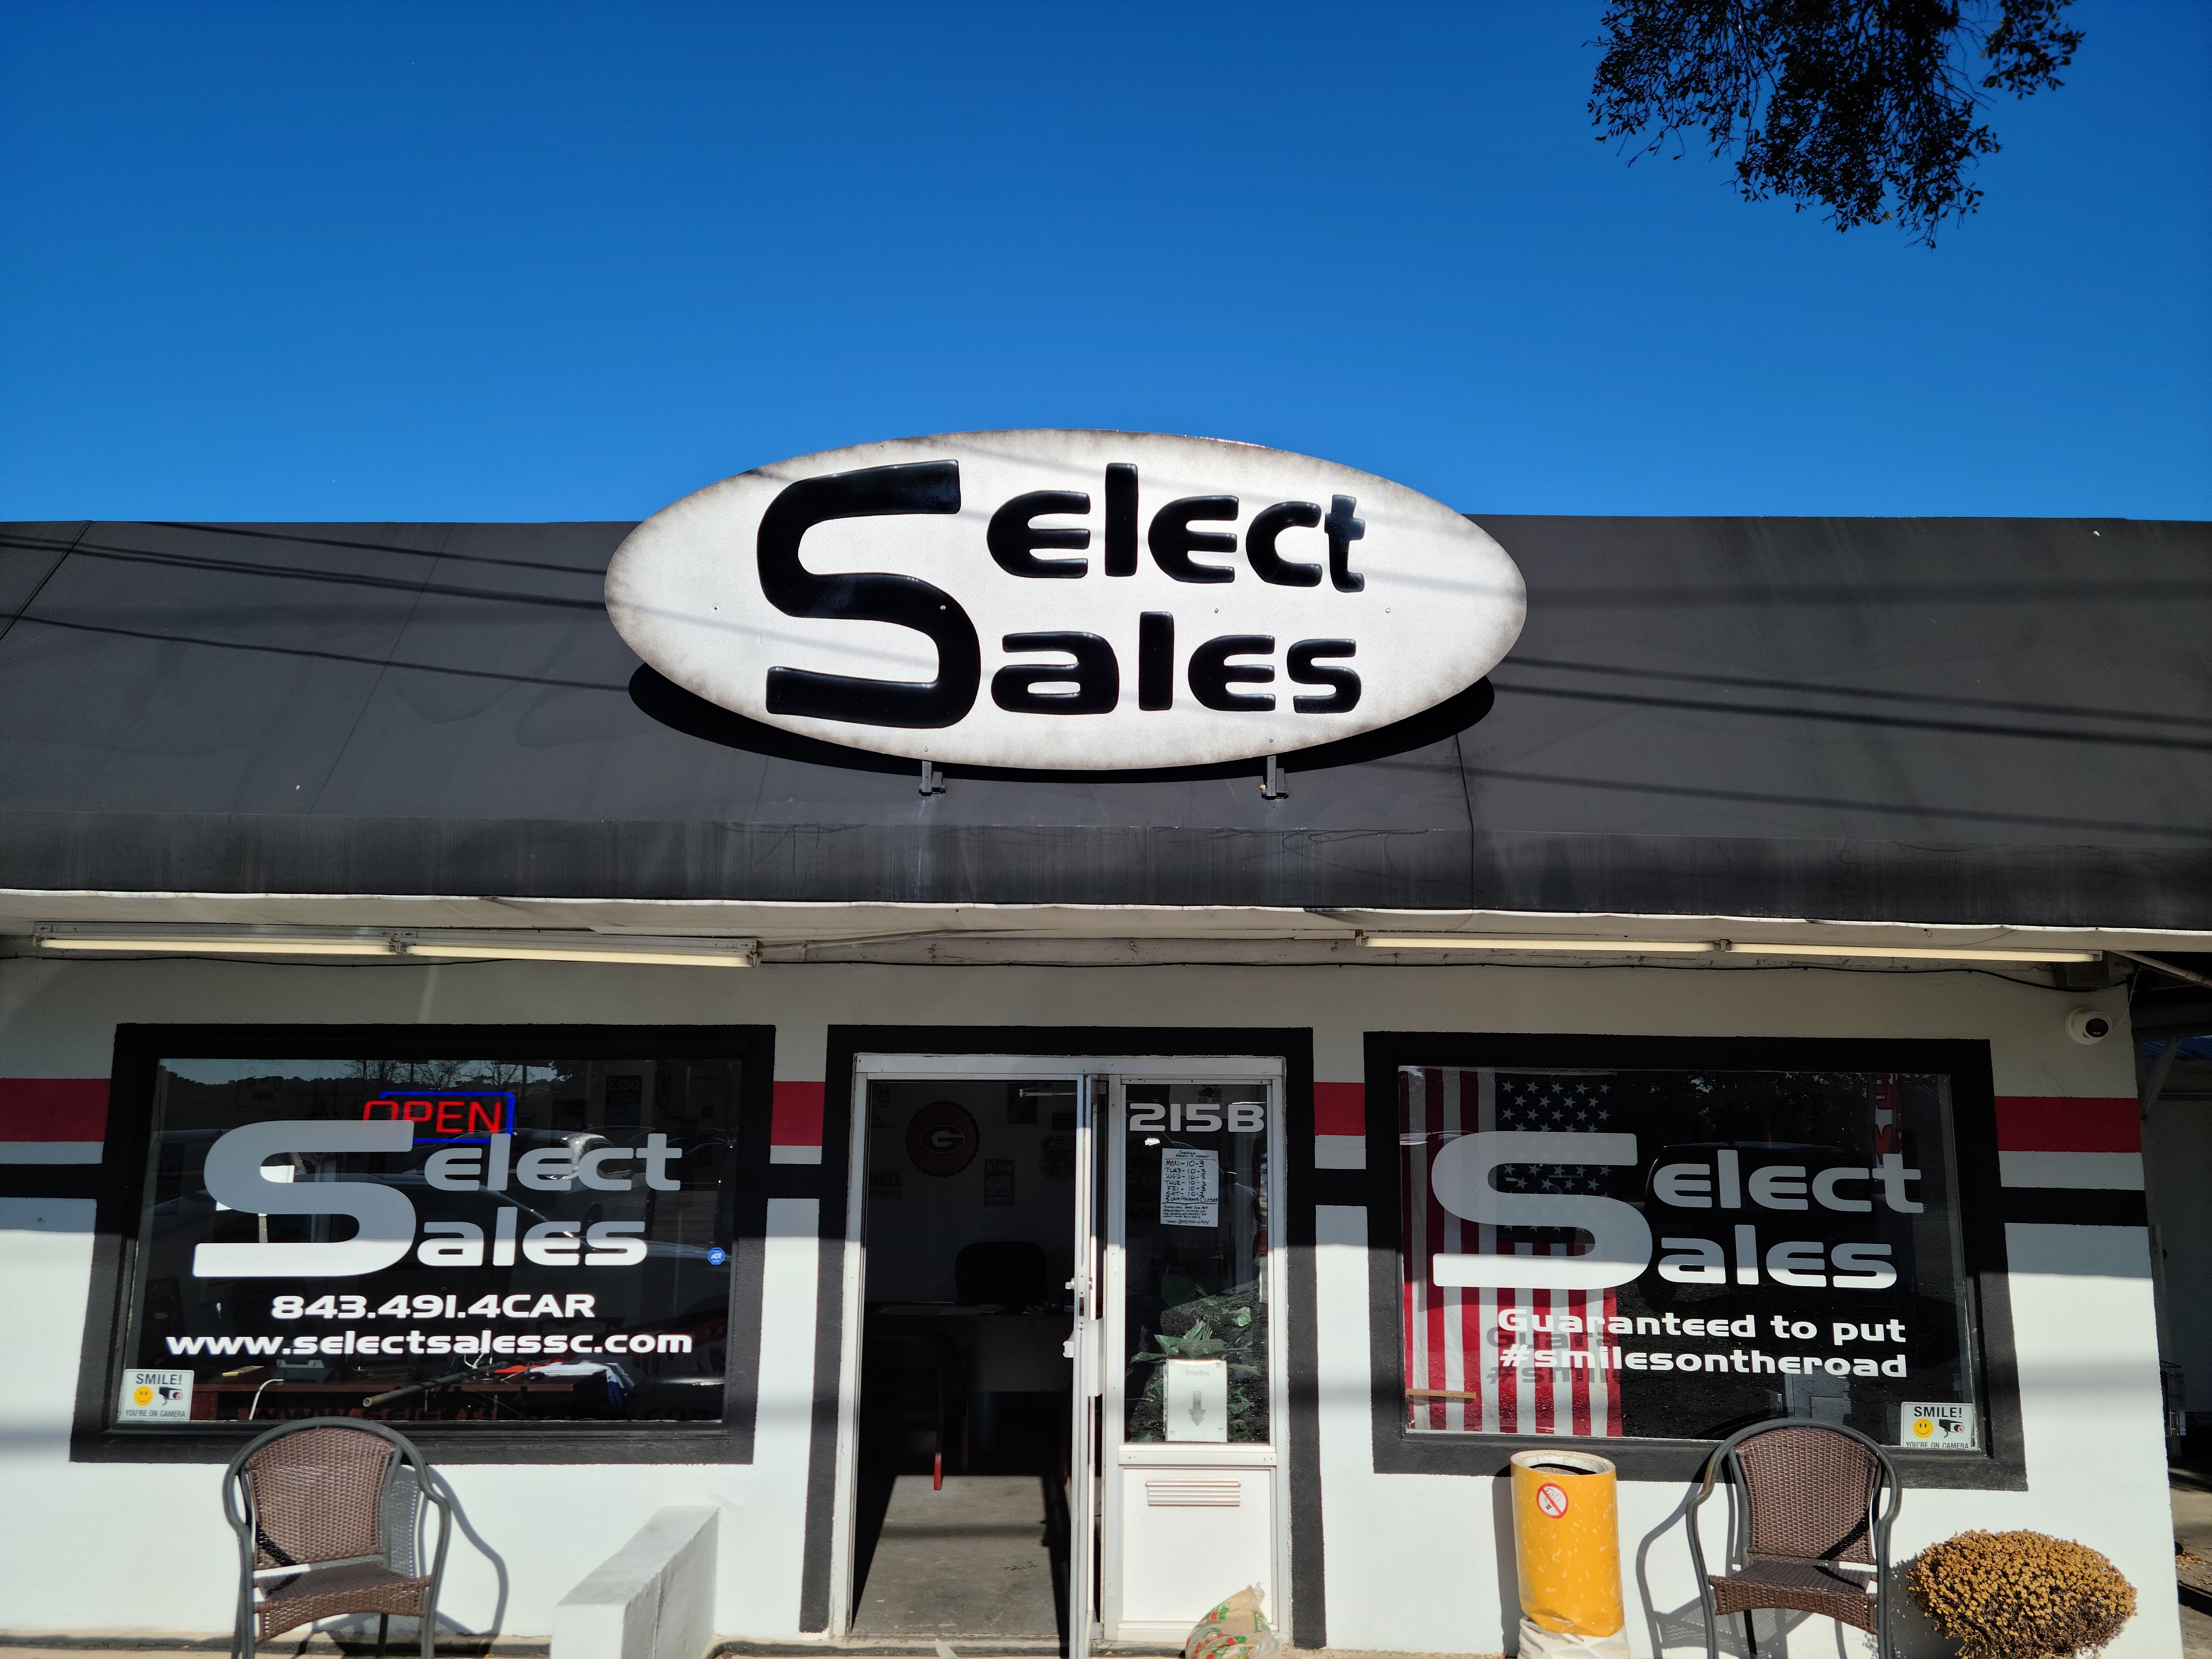 Select Sales LLC